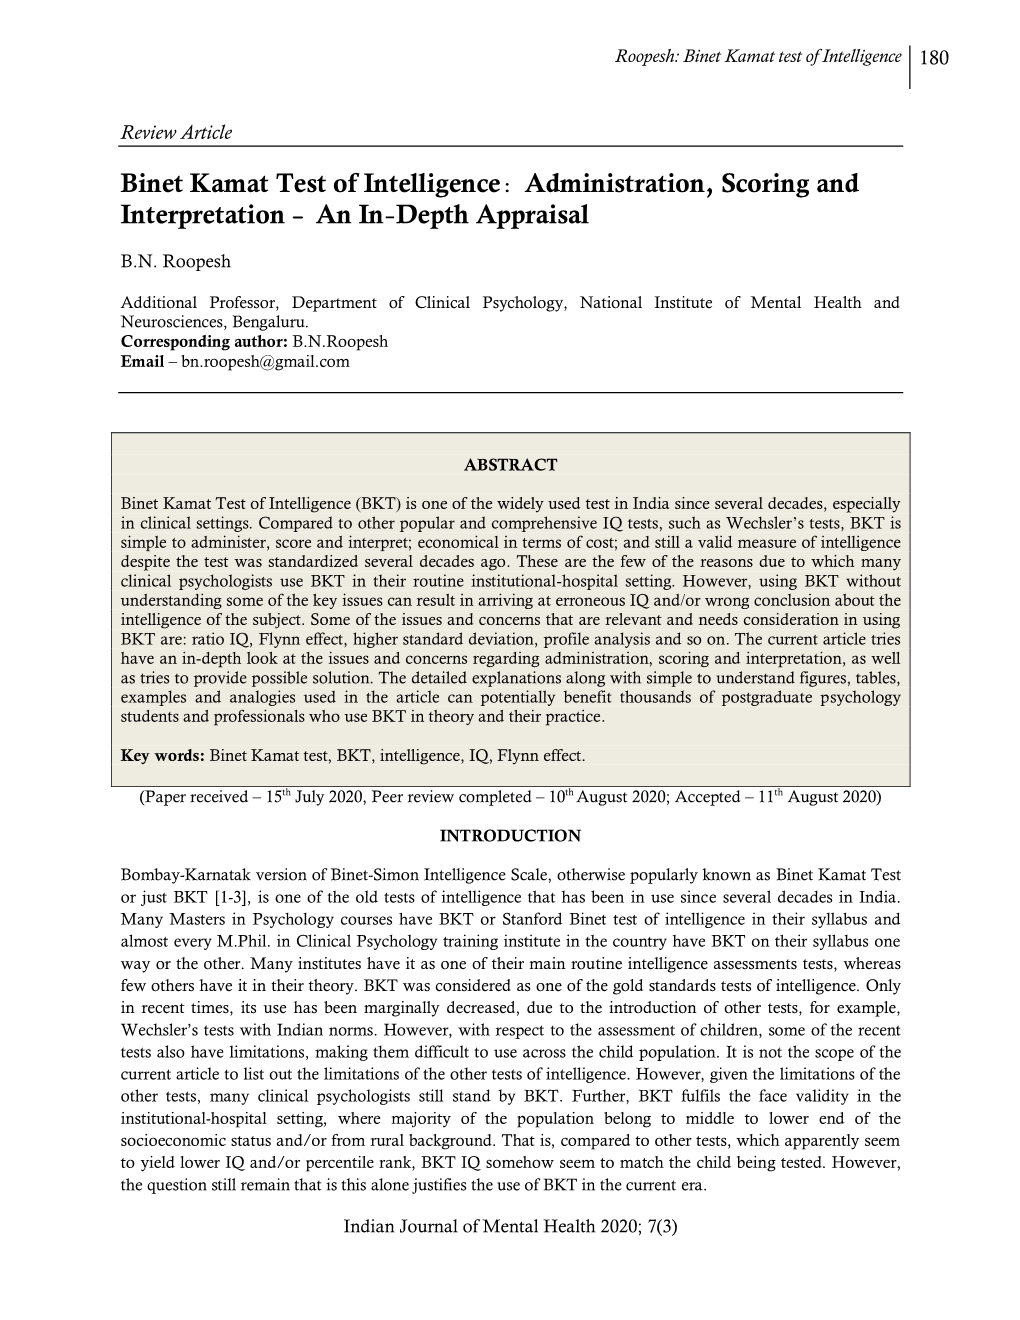 Binet Kamat Test of Intelligence: Administration, Scoring and Interpretation – an In-Depth Appraisal